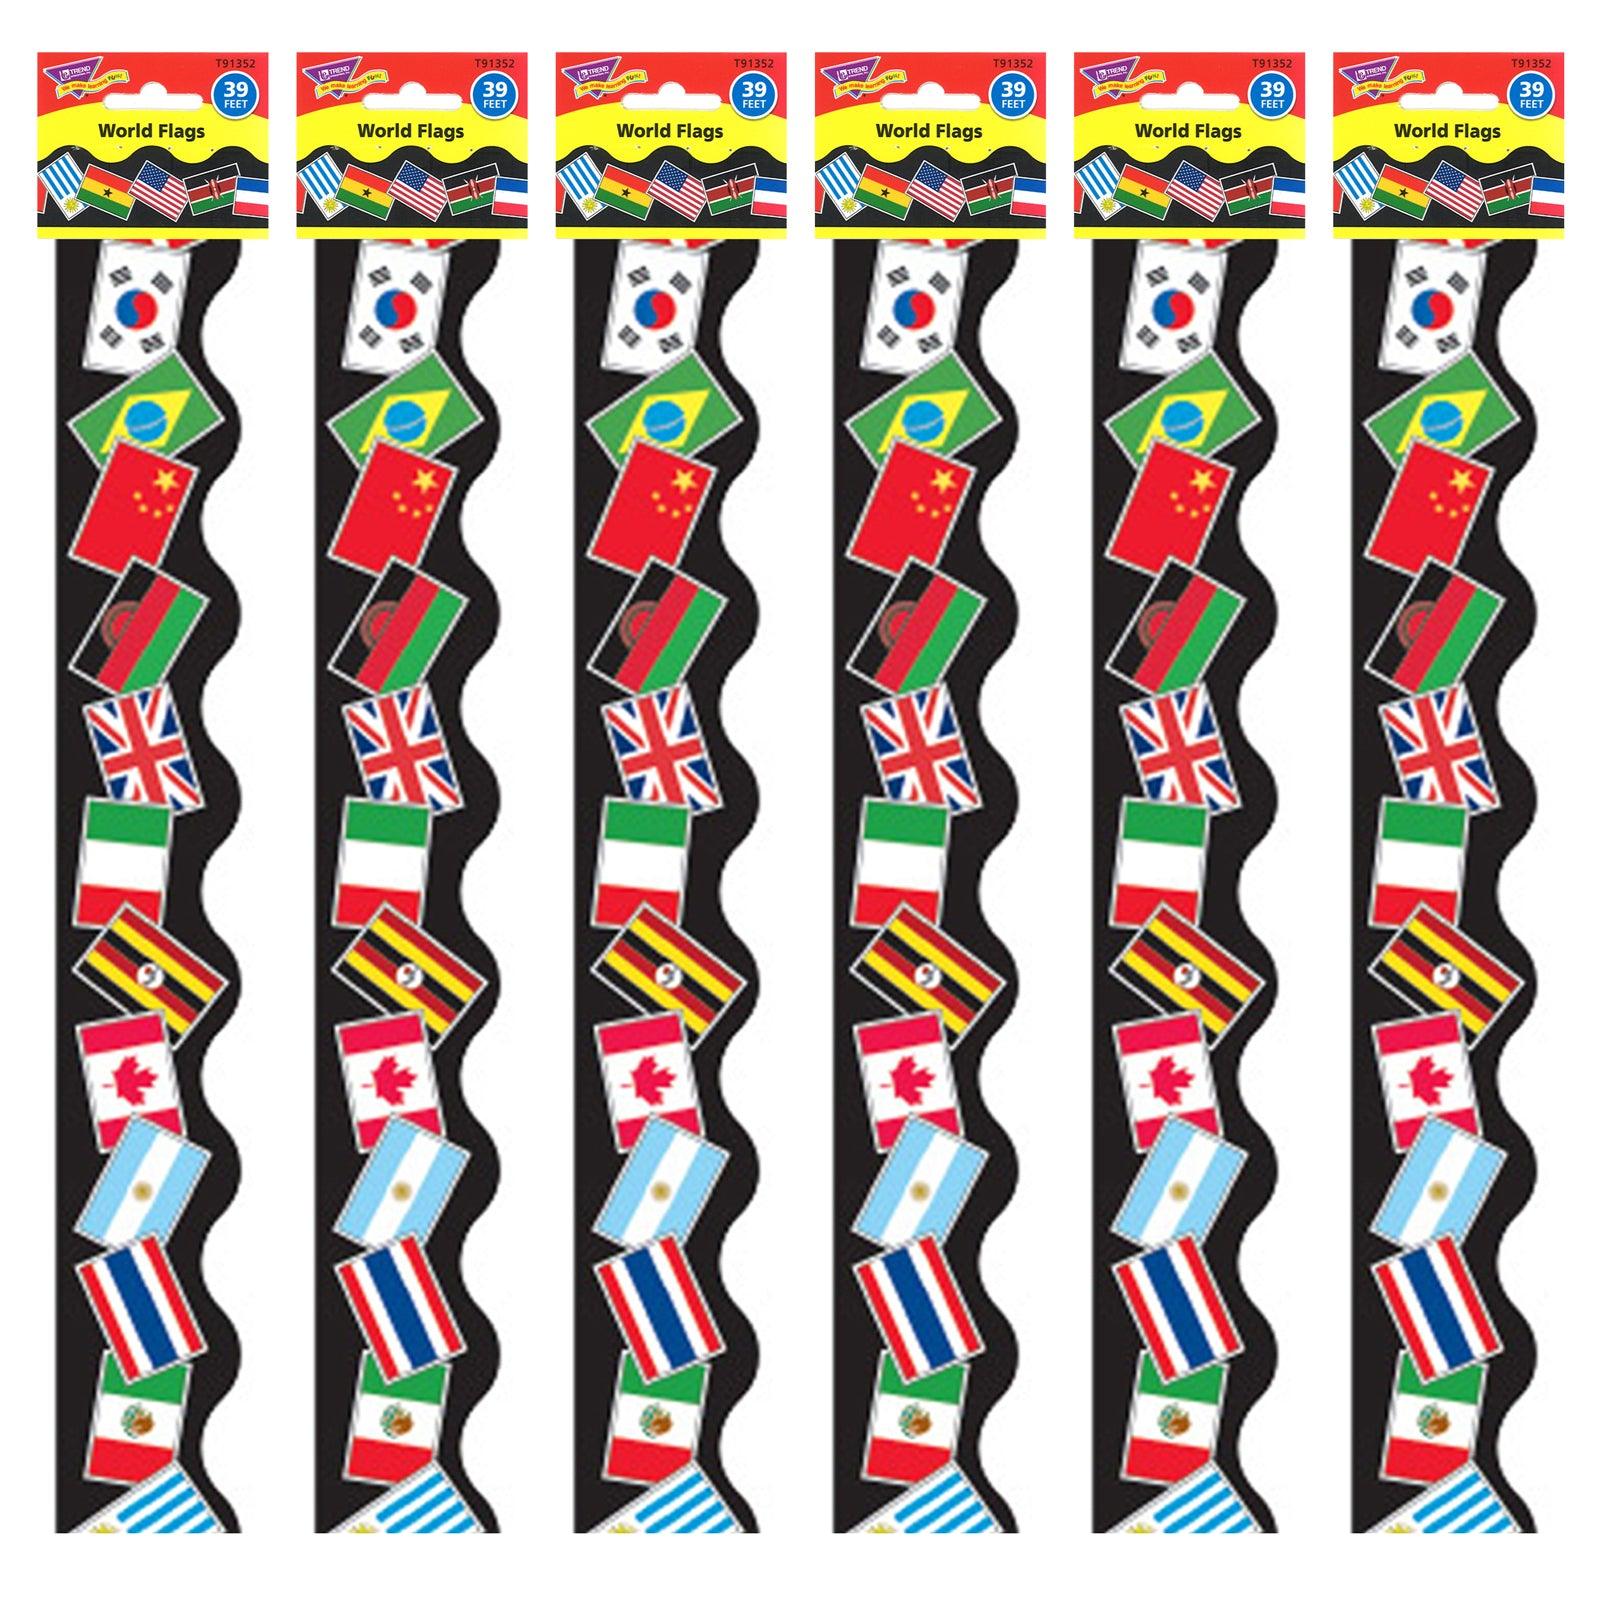 World Flags Terrific Trimmers®, 39 Feet Per Pack, 6 Packs - Loomini